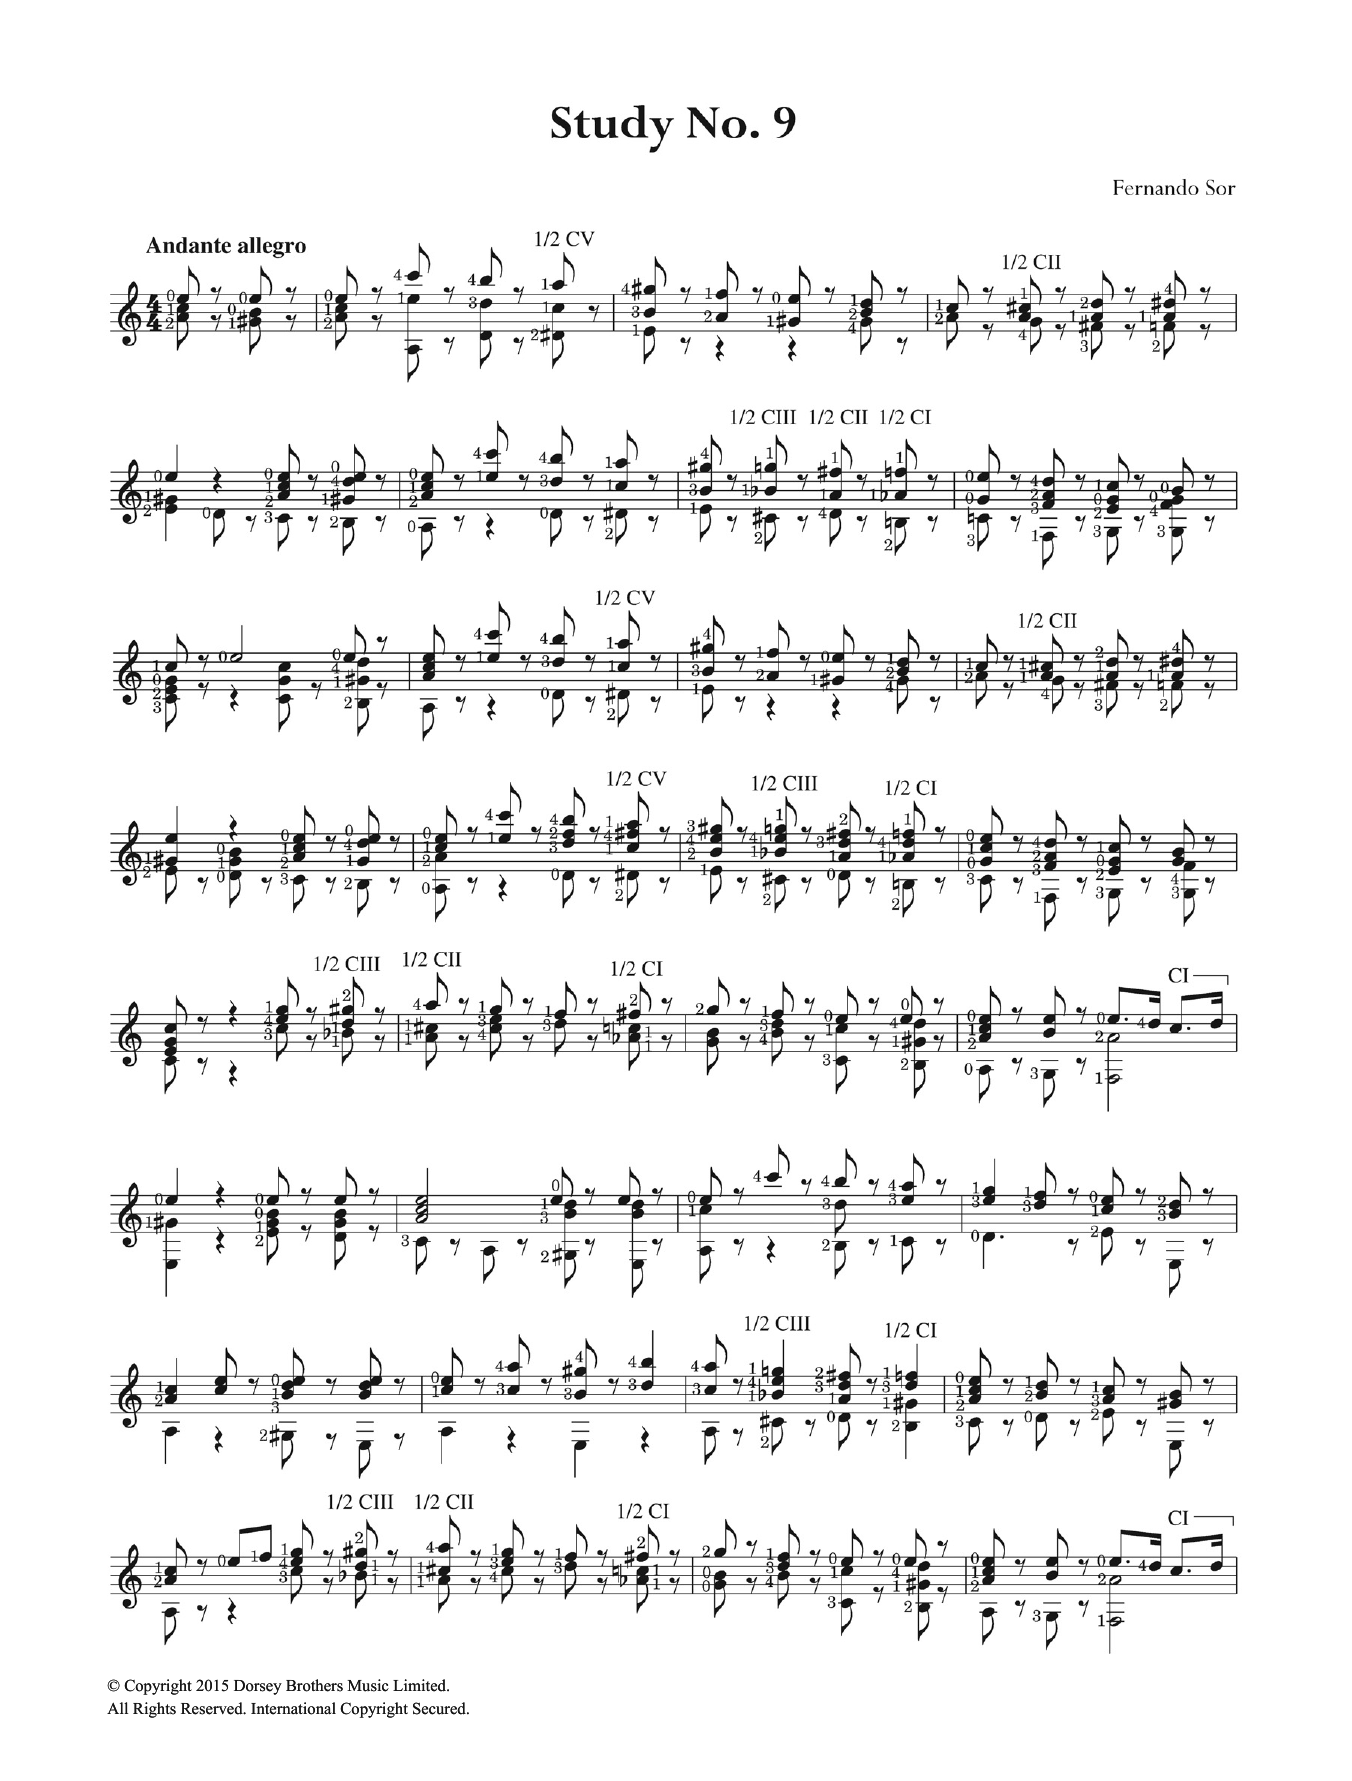 Fernando Sor Study No. 9 Sheet Music Notes & Chords for Guitar - Download or Print PDF